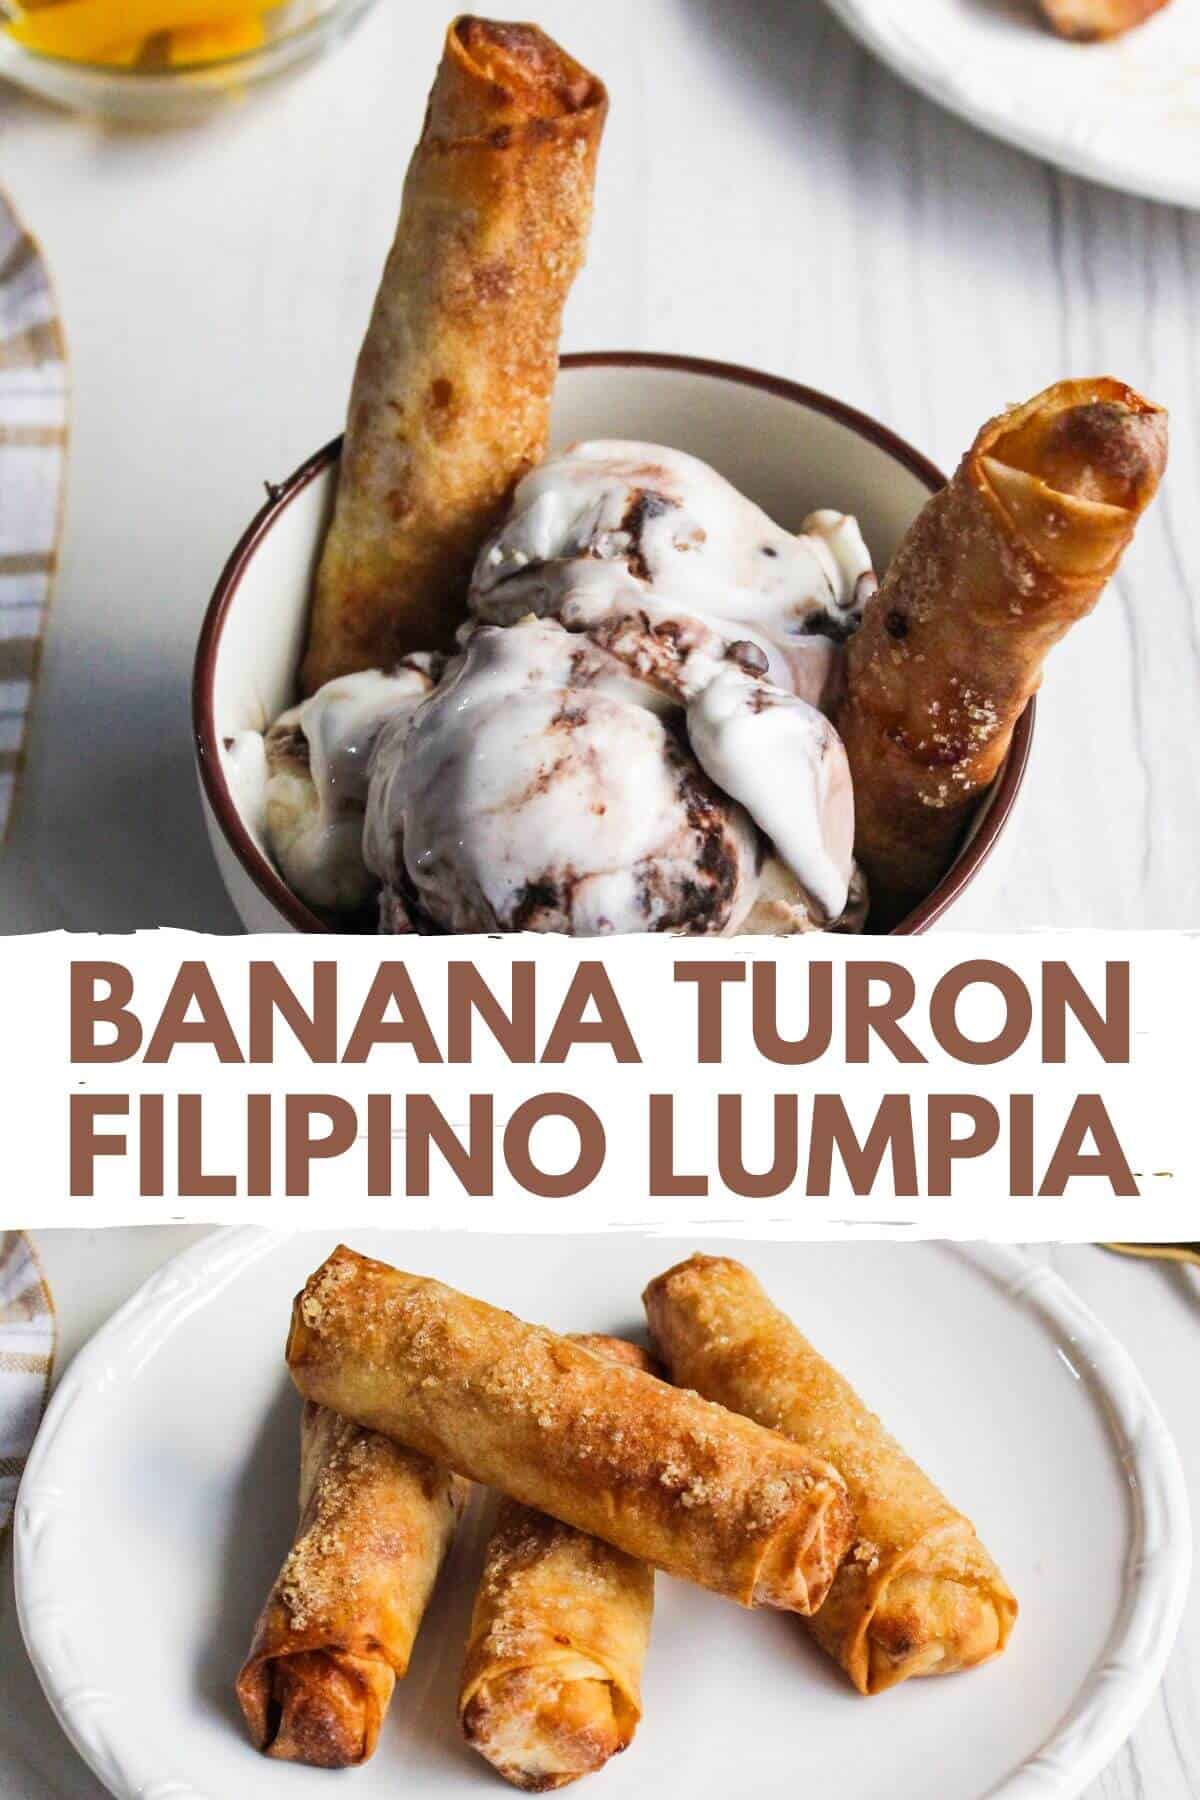 Banana turon filipino lumpia with ice cream and ice cream.